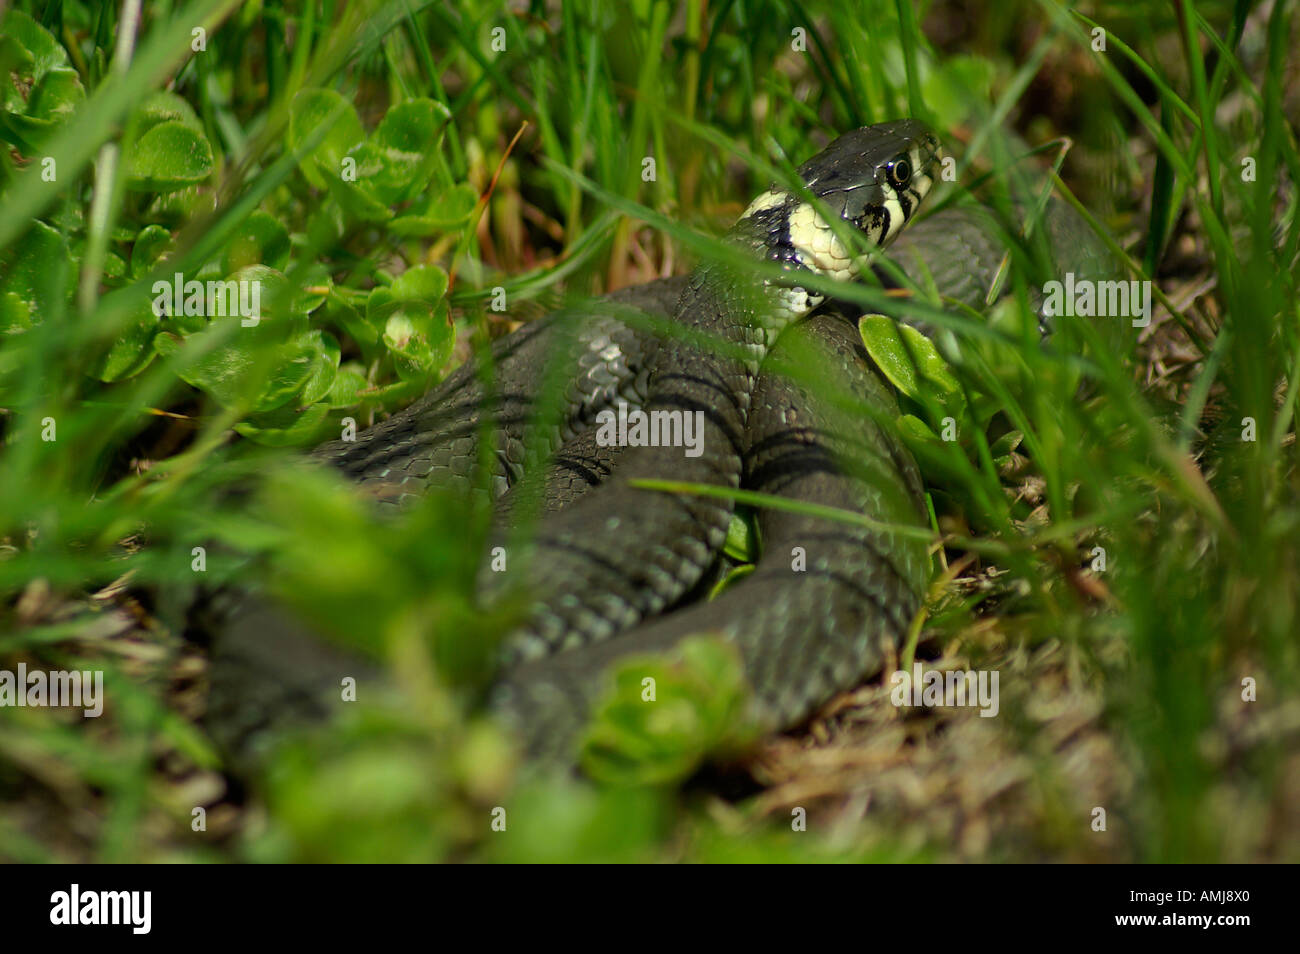 Un serpent dans l'herbe. Banque D'Images